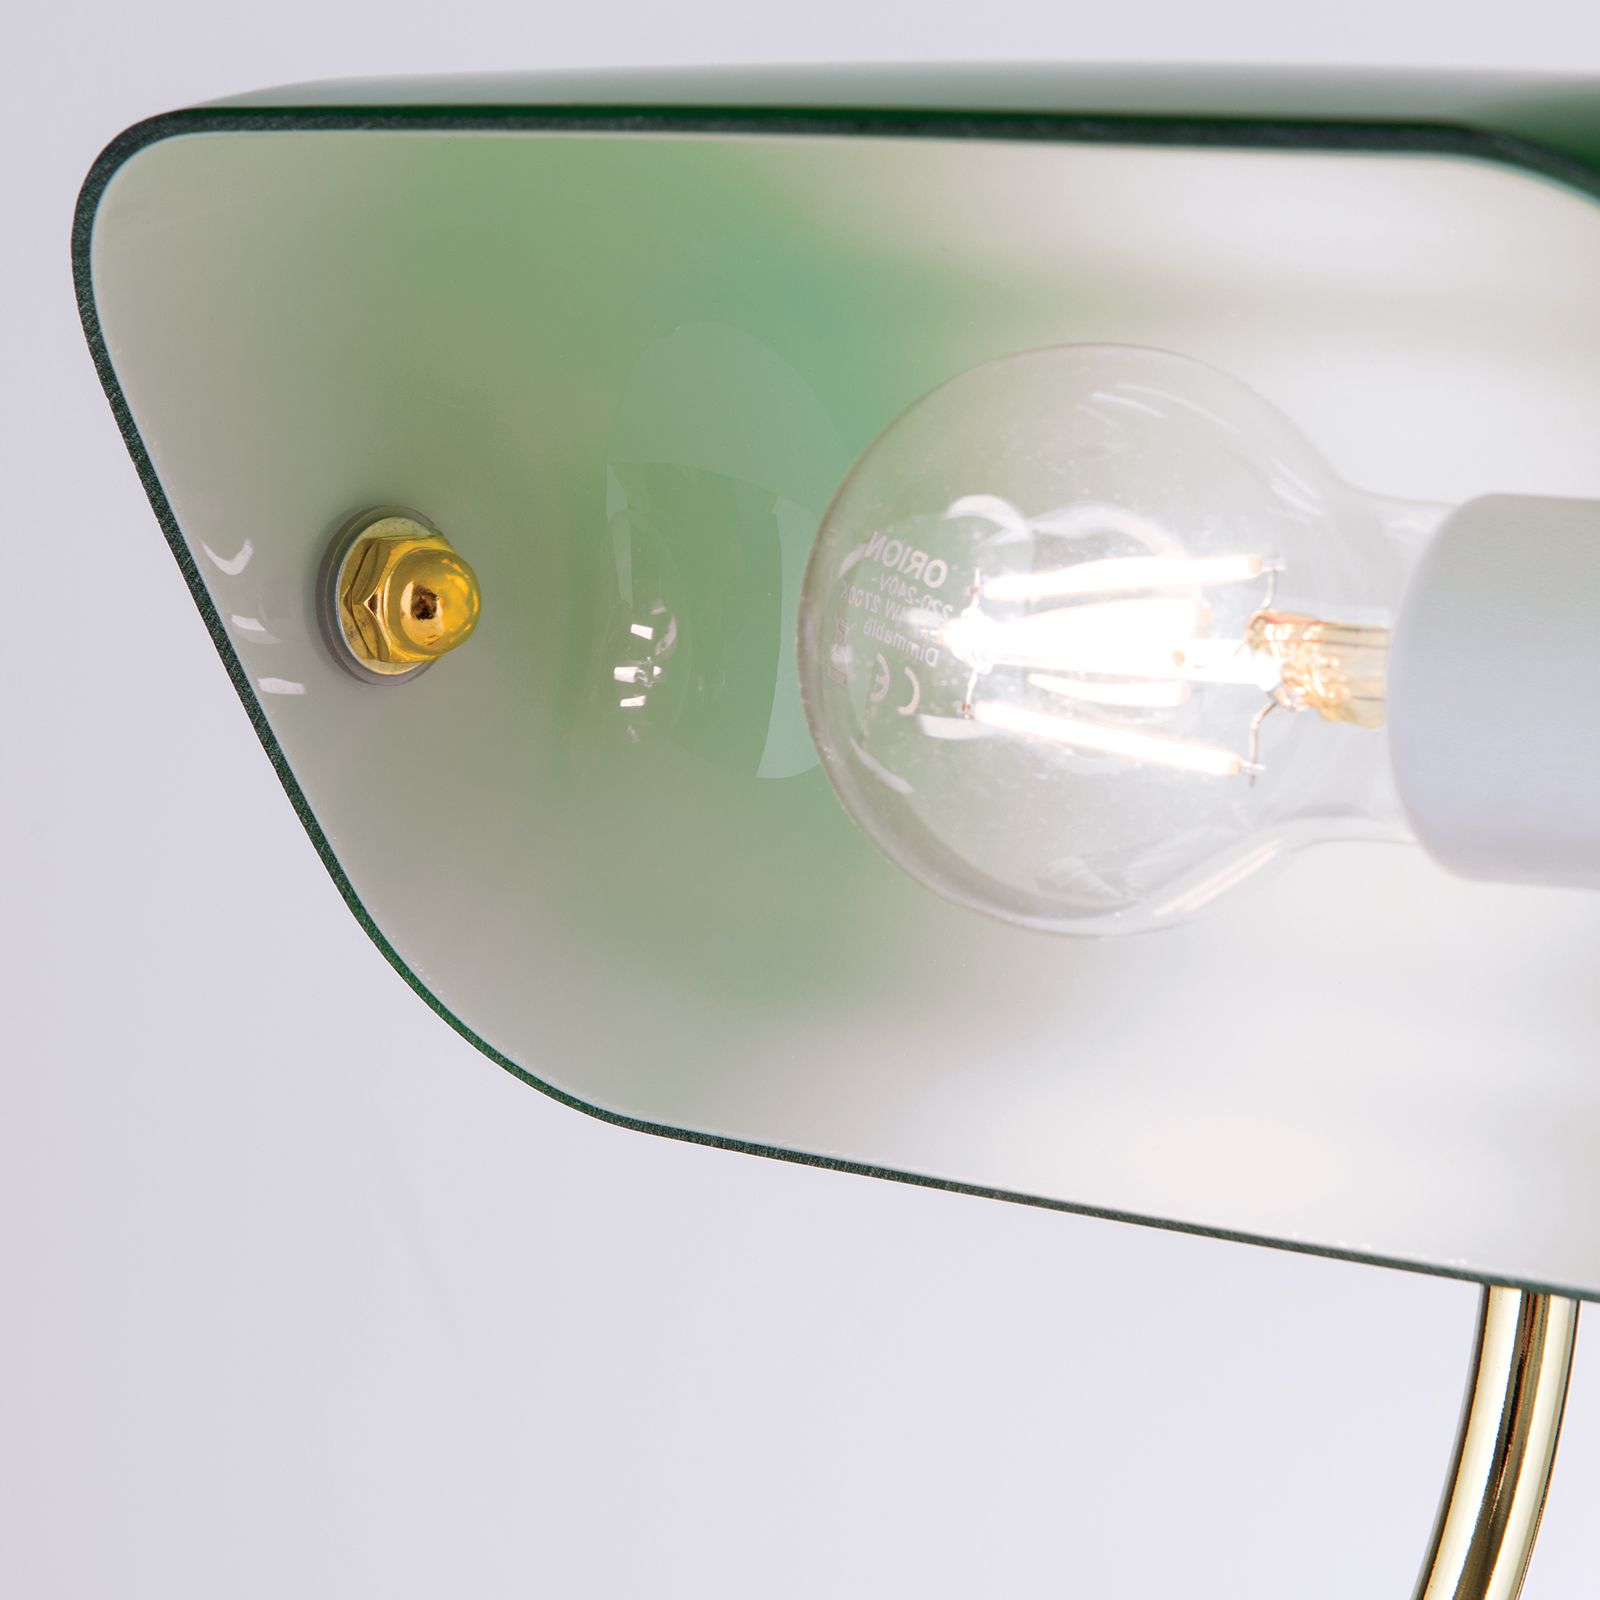 Banker Dark Brass Lamp Elegant Office Lamp With Green Glass Office